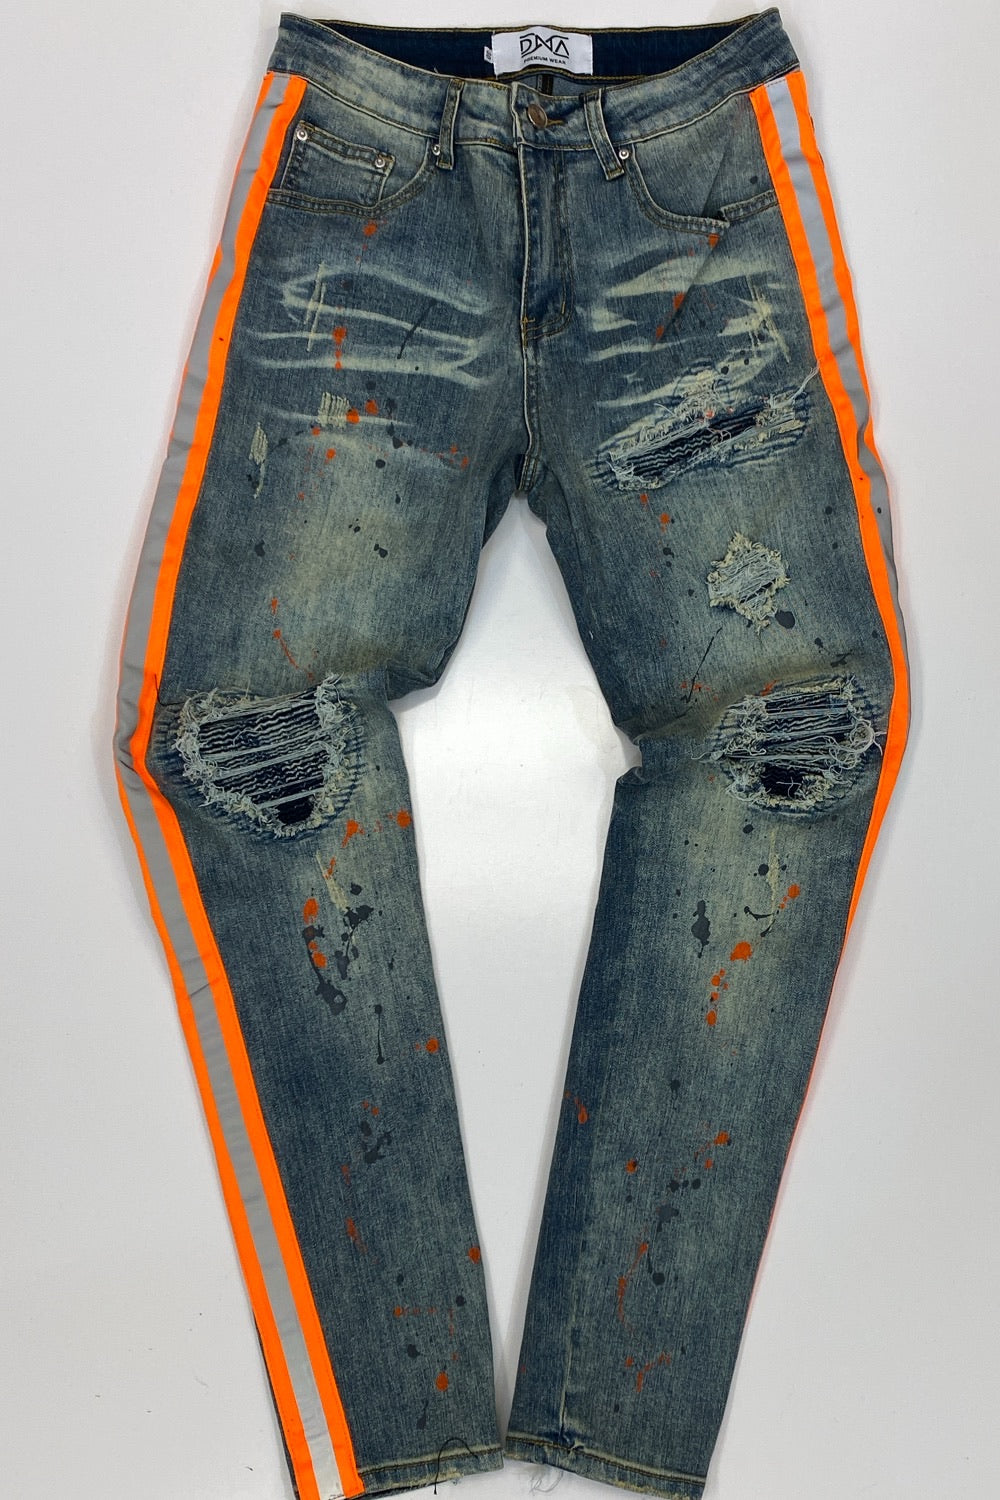 Dna Premium Wear- paint splattered reflective stripe jeans